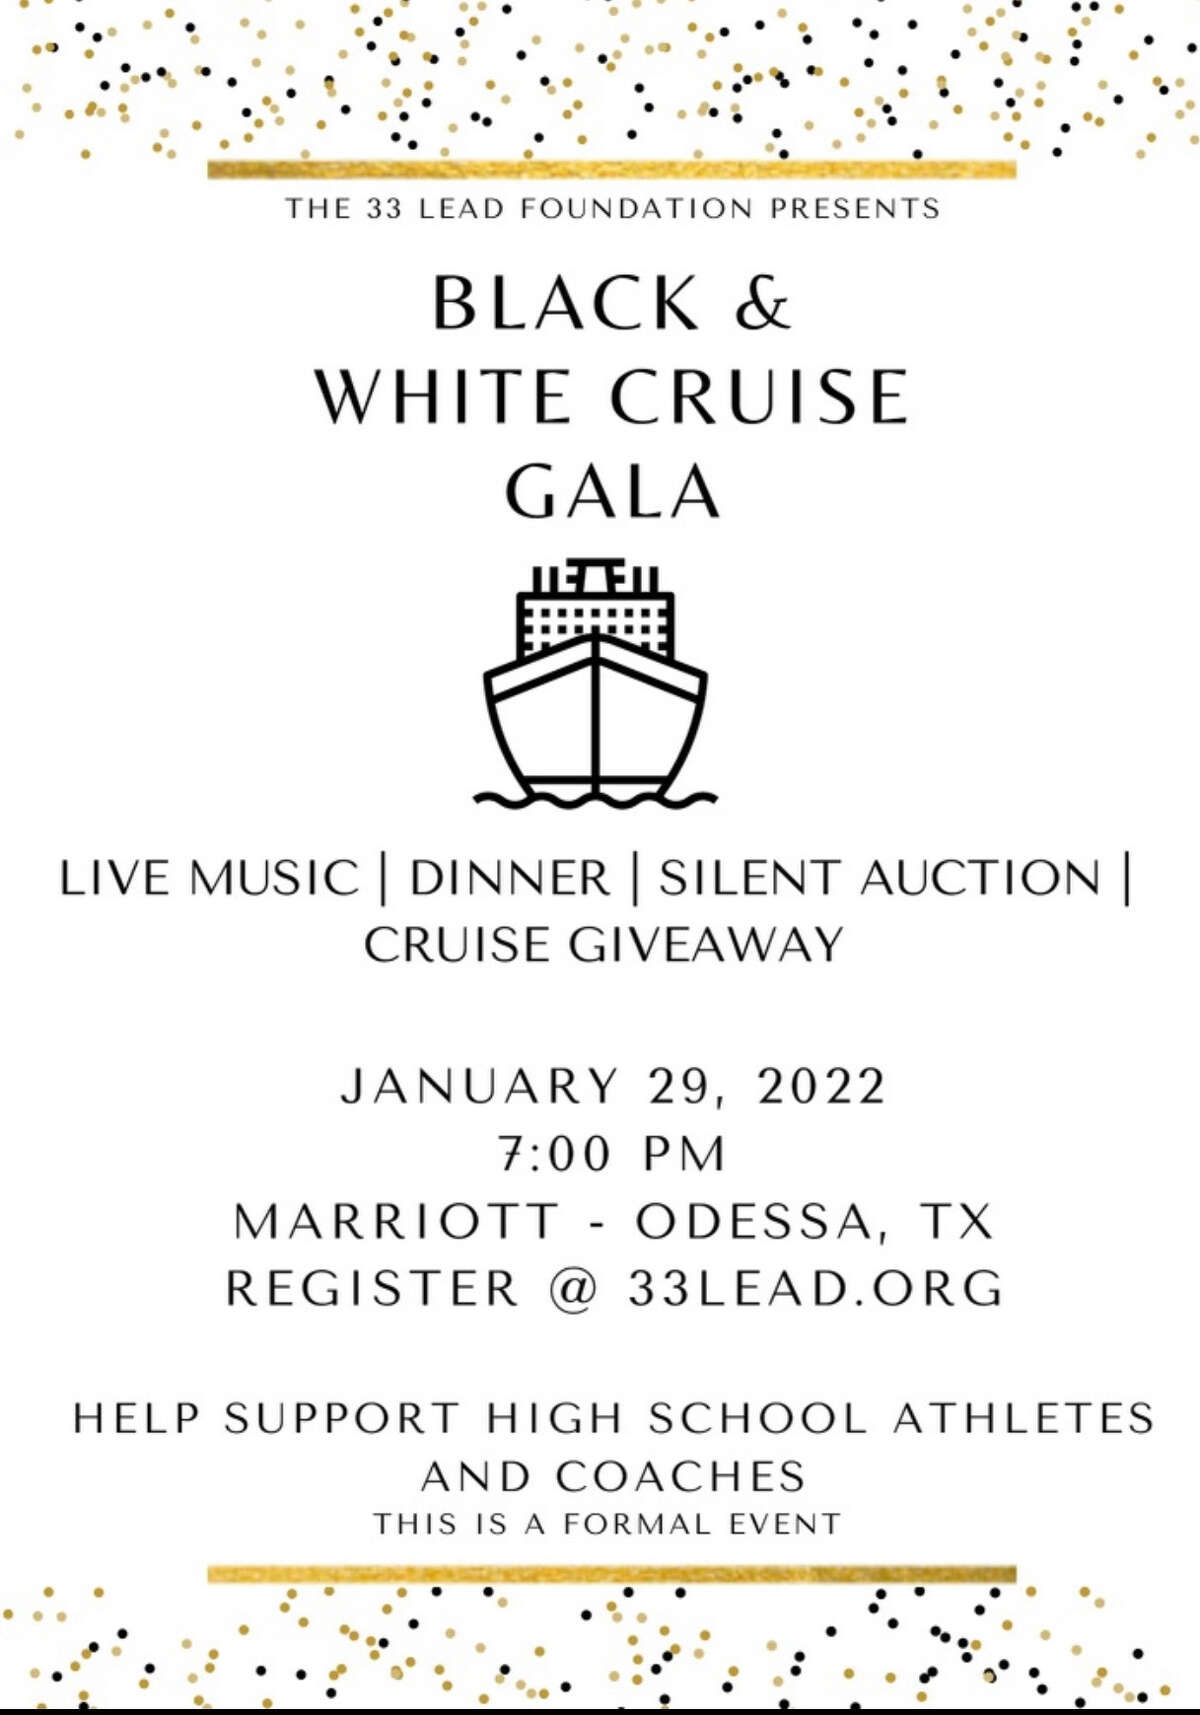 Black & Cruise Gala flyer